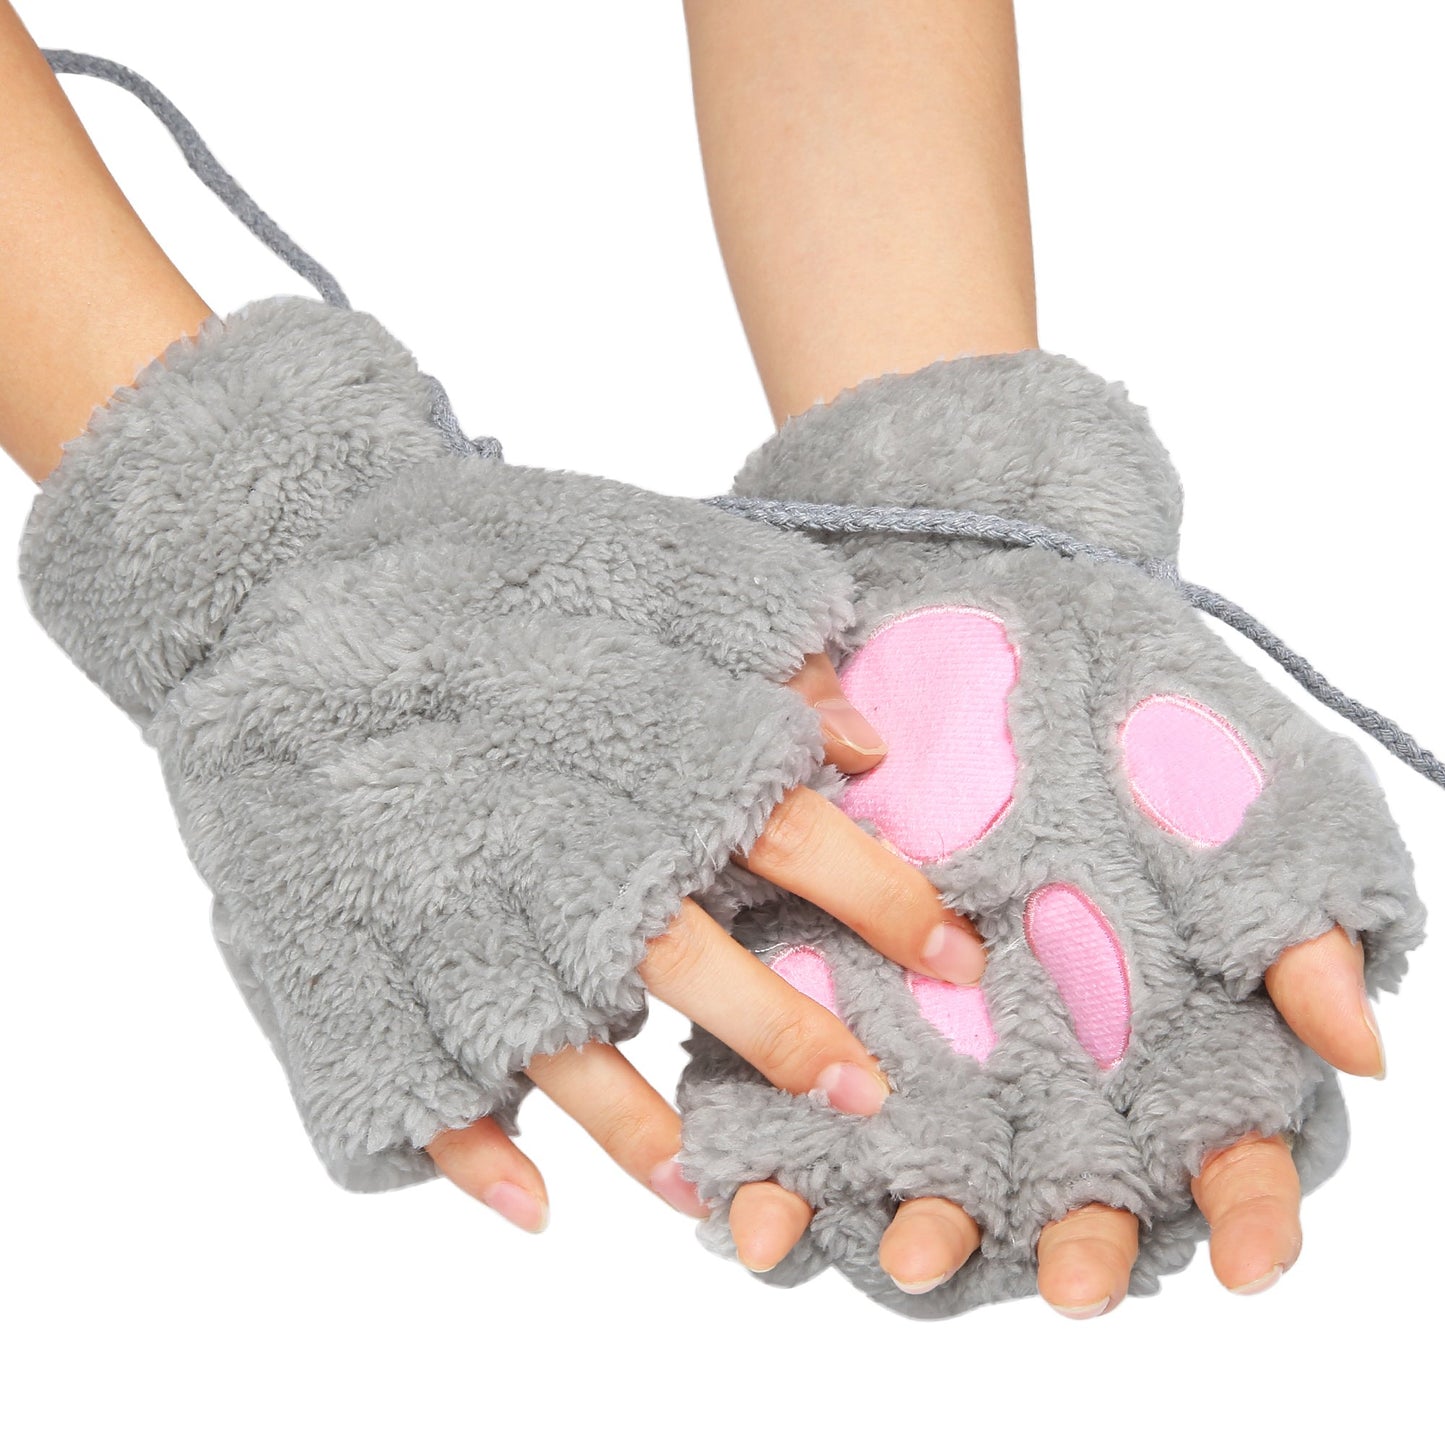 Plush Cat Paw Gloves - Grey